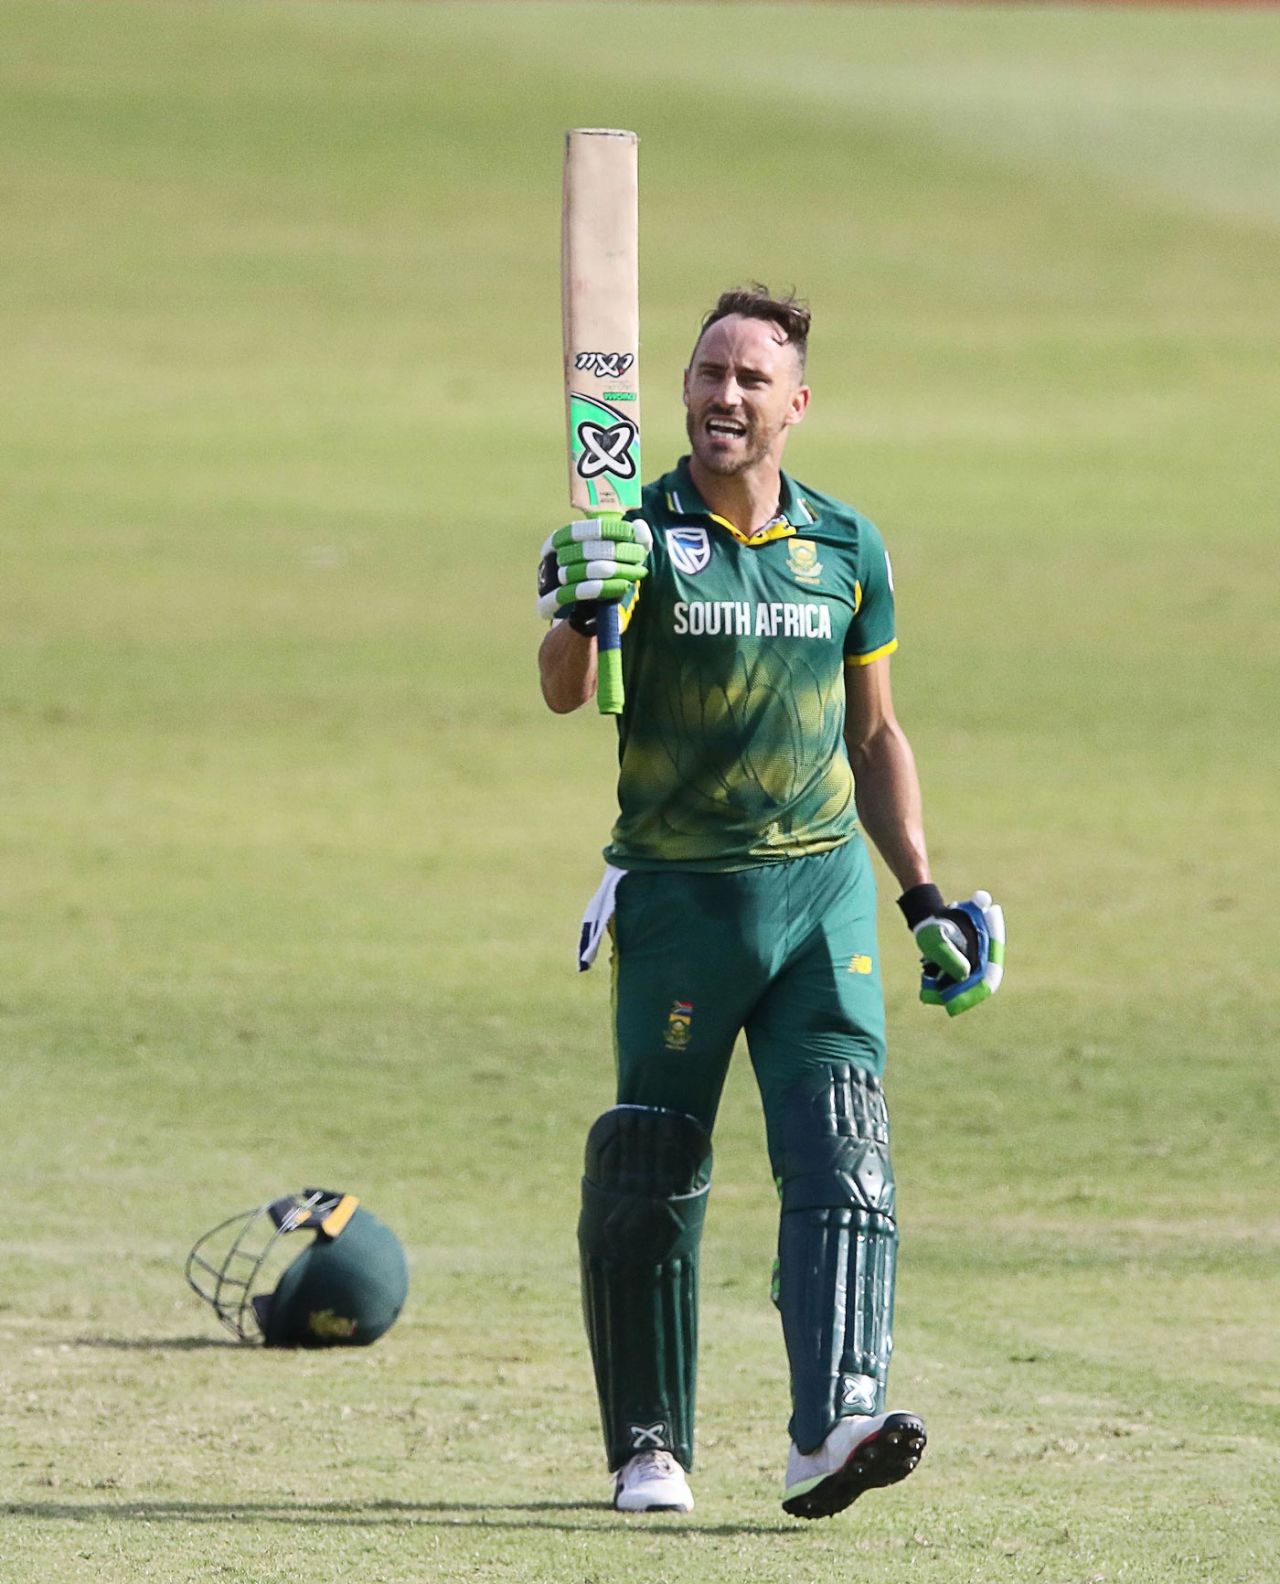 Faf du Plessis raises the bat on reaching his hundred, South Africa v India, 1st ODI, Durban, February 1, 2018